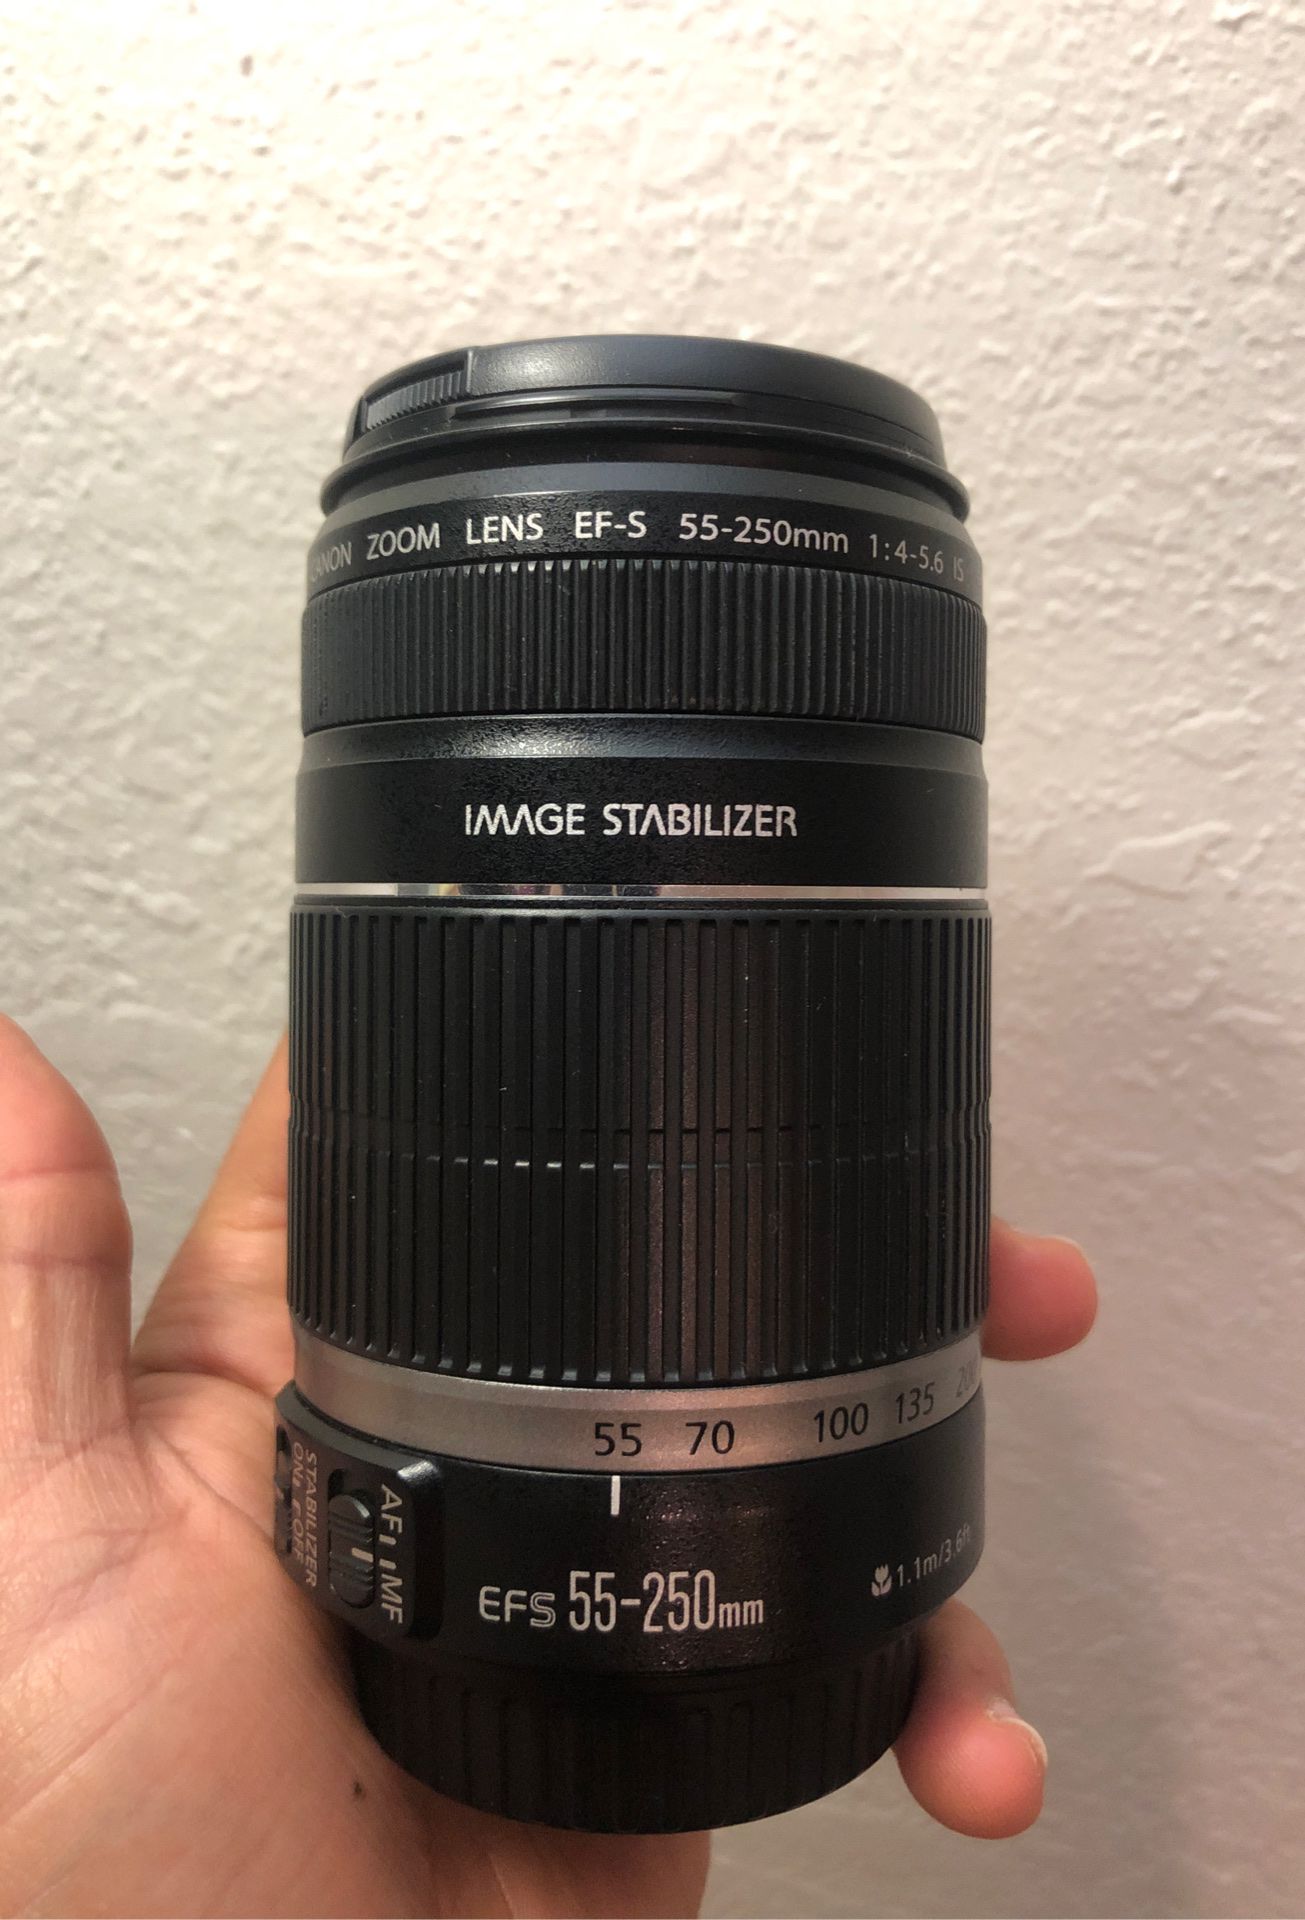 Canon 55-250 mm lense (image stabilizer)